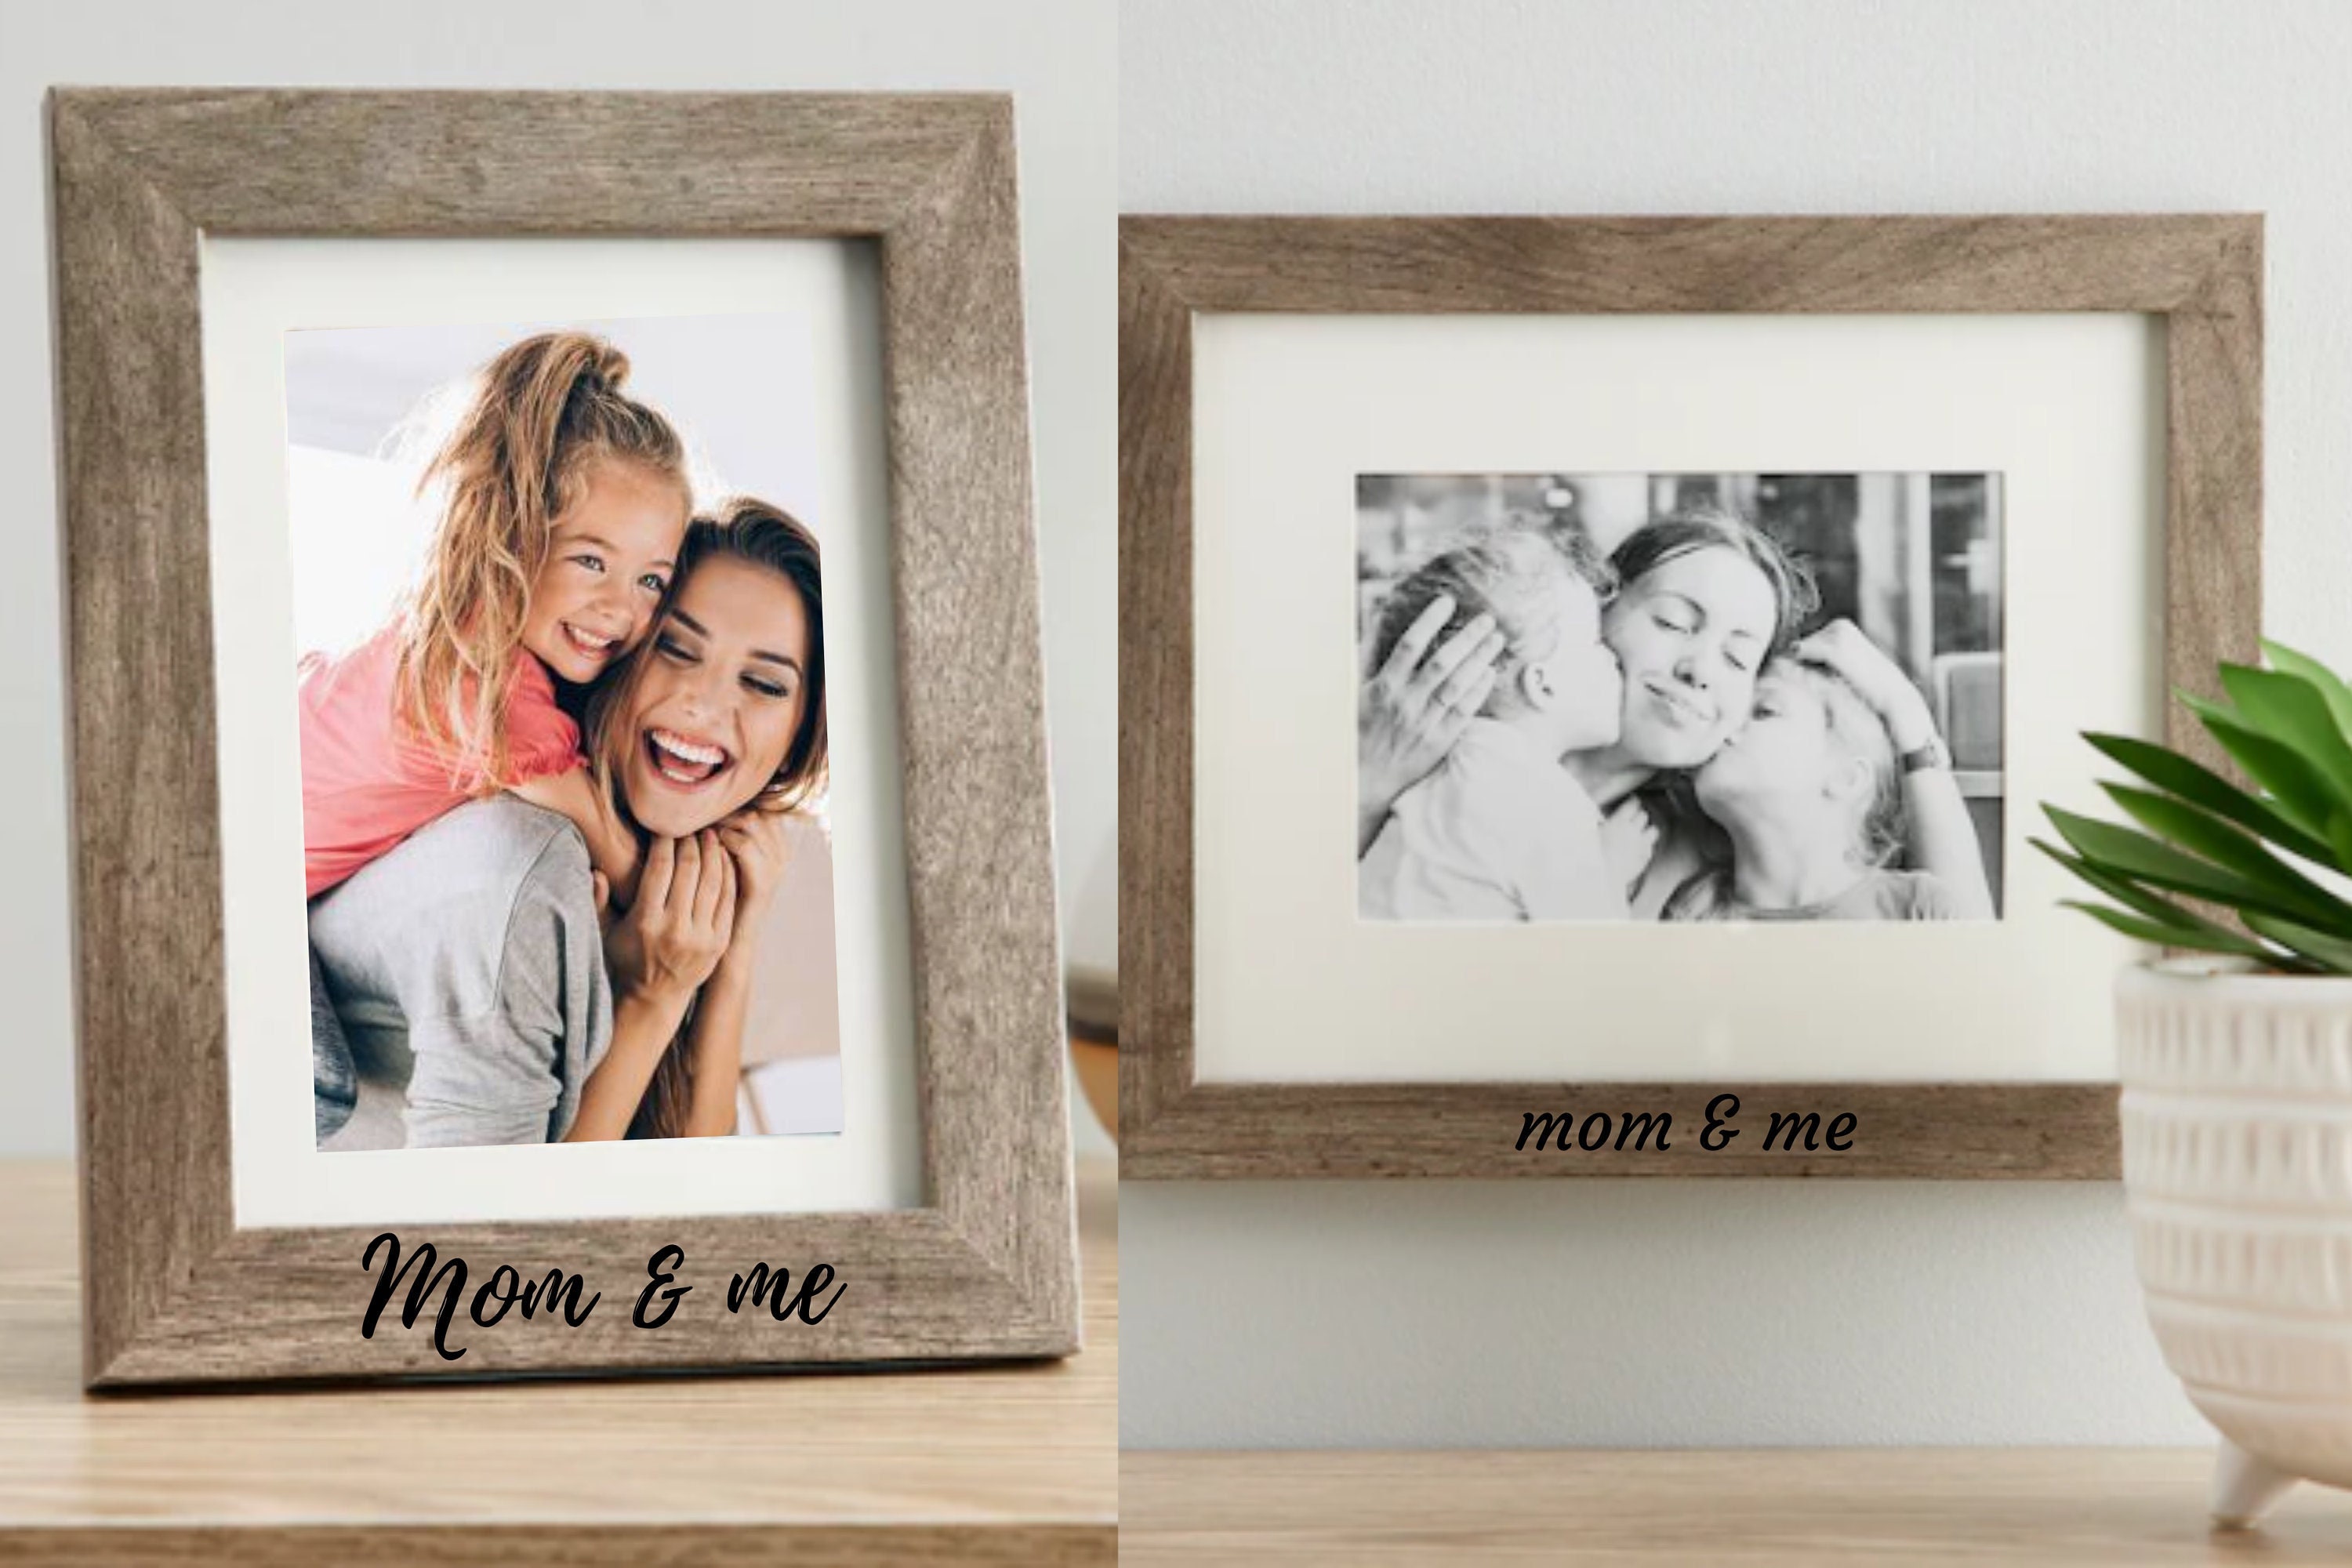 Bambino Resin Mummy & Me Photo Frame 6 x 4 (15 cm x 10 cm) - Allure  Online Shop